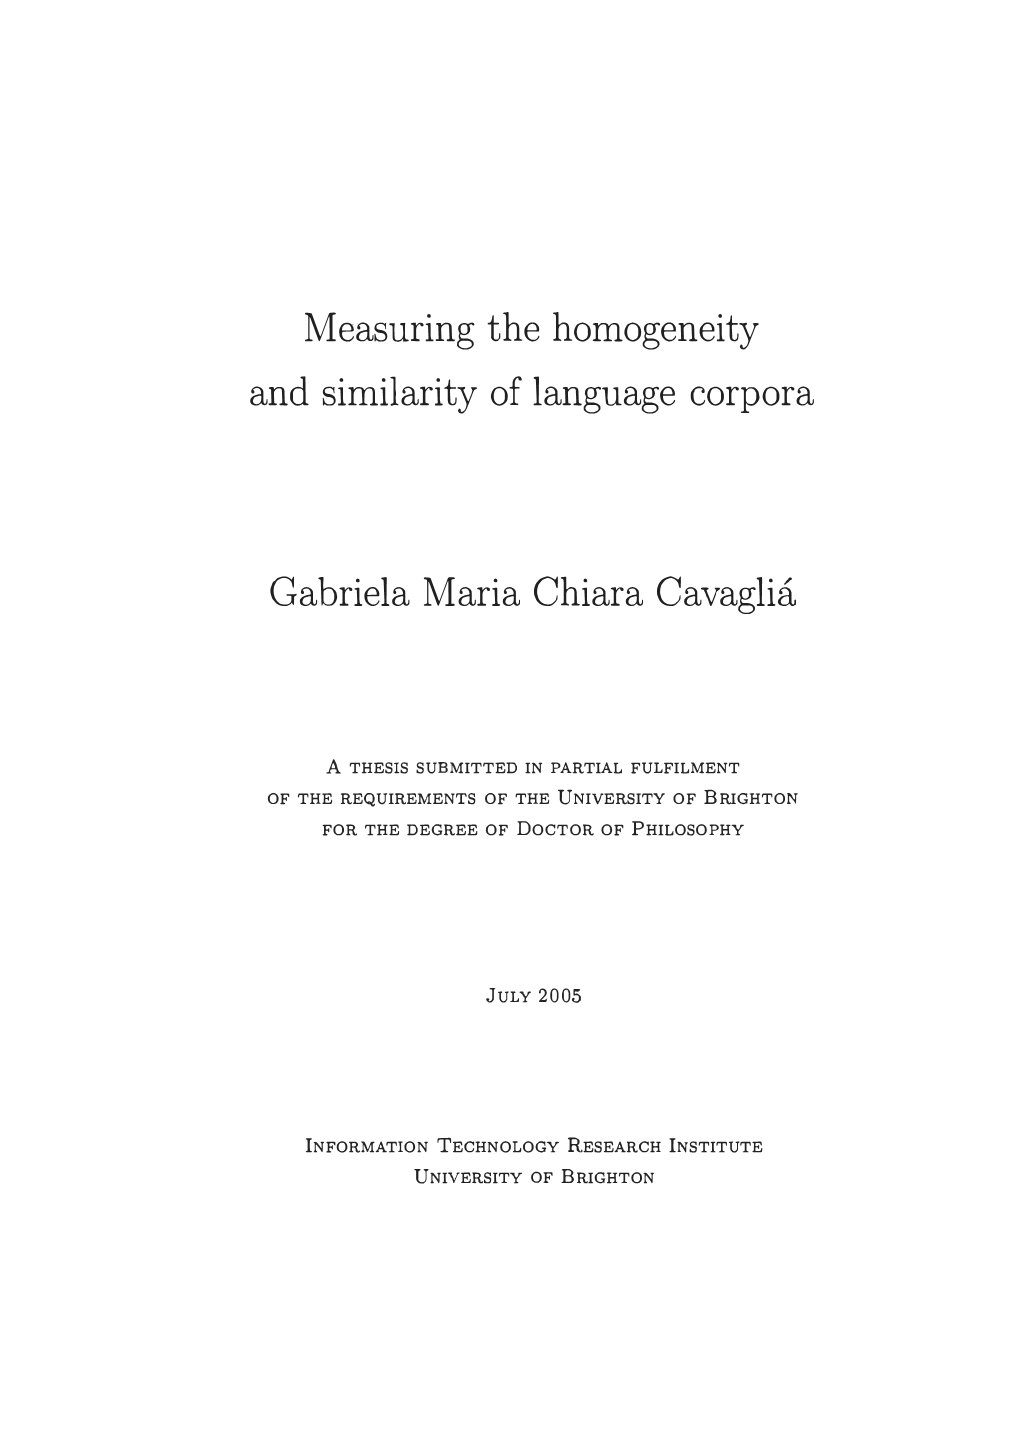 Measuring the Homogeneity and Similarity of Language Corpora